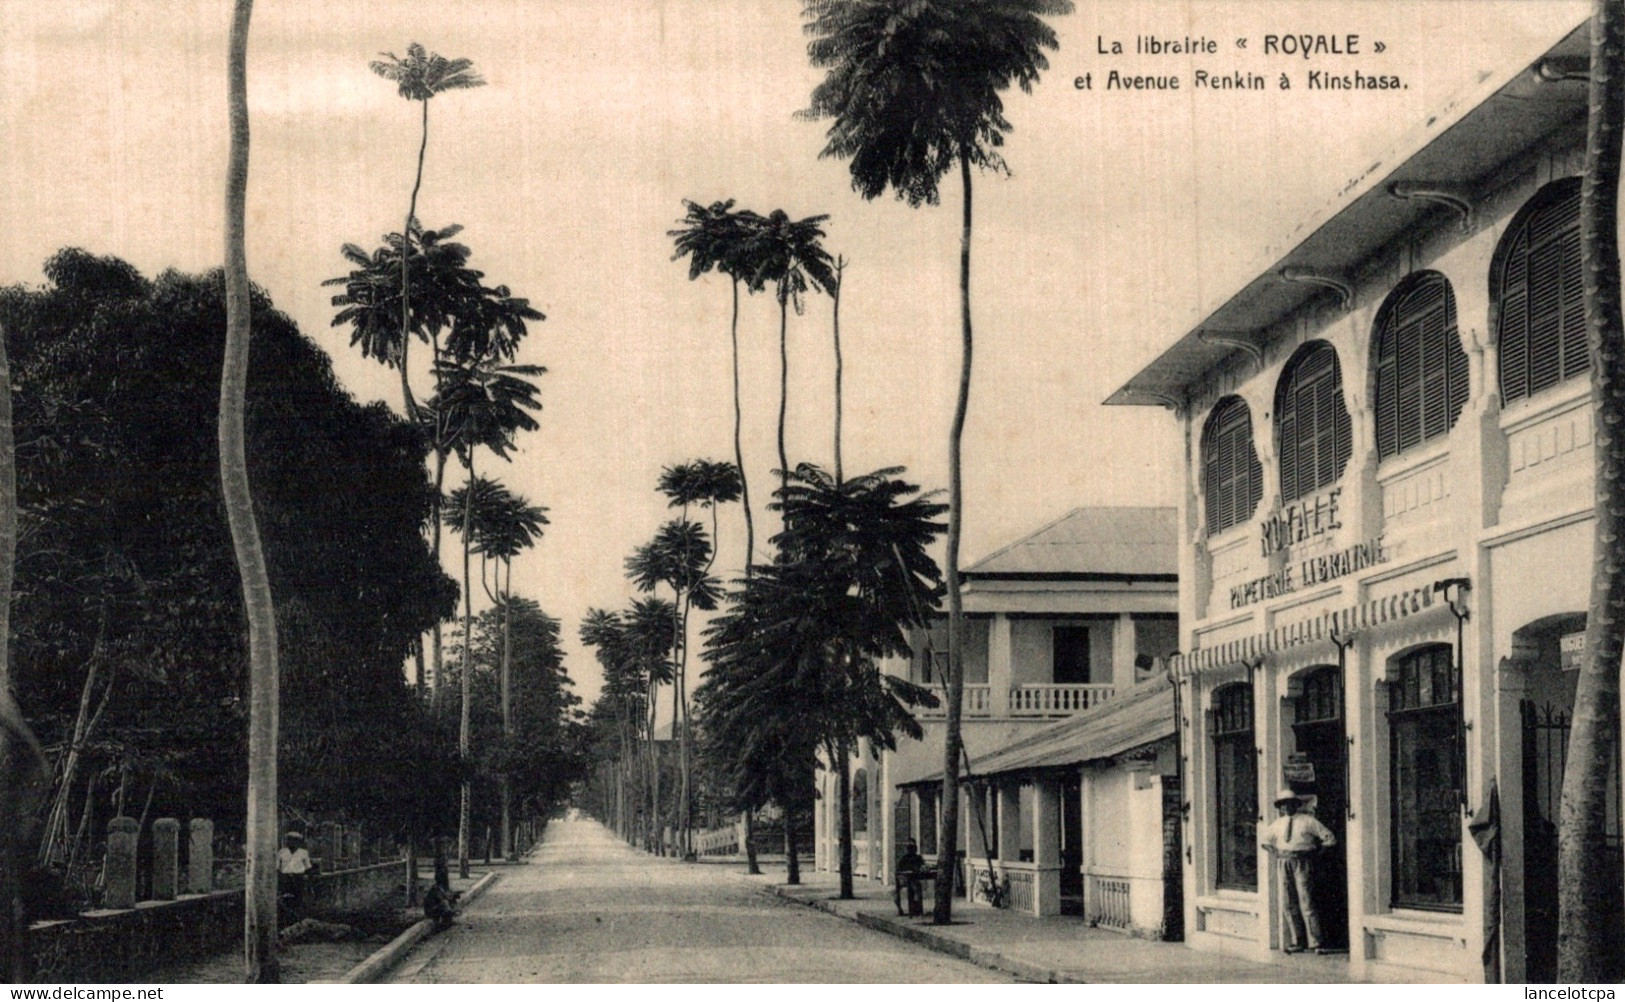 KINSHASA / LA LIBRAIRIE ROYALE ET AVENUE RENKIN - Kinshasa - Leopoldville